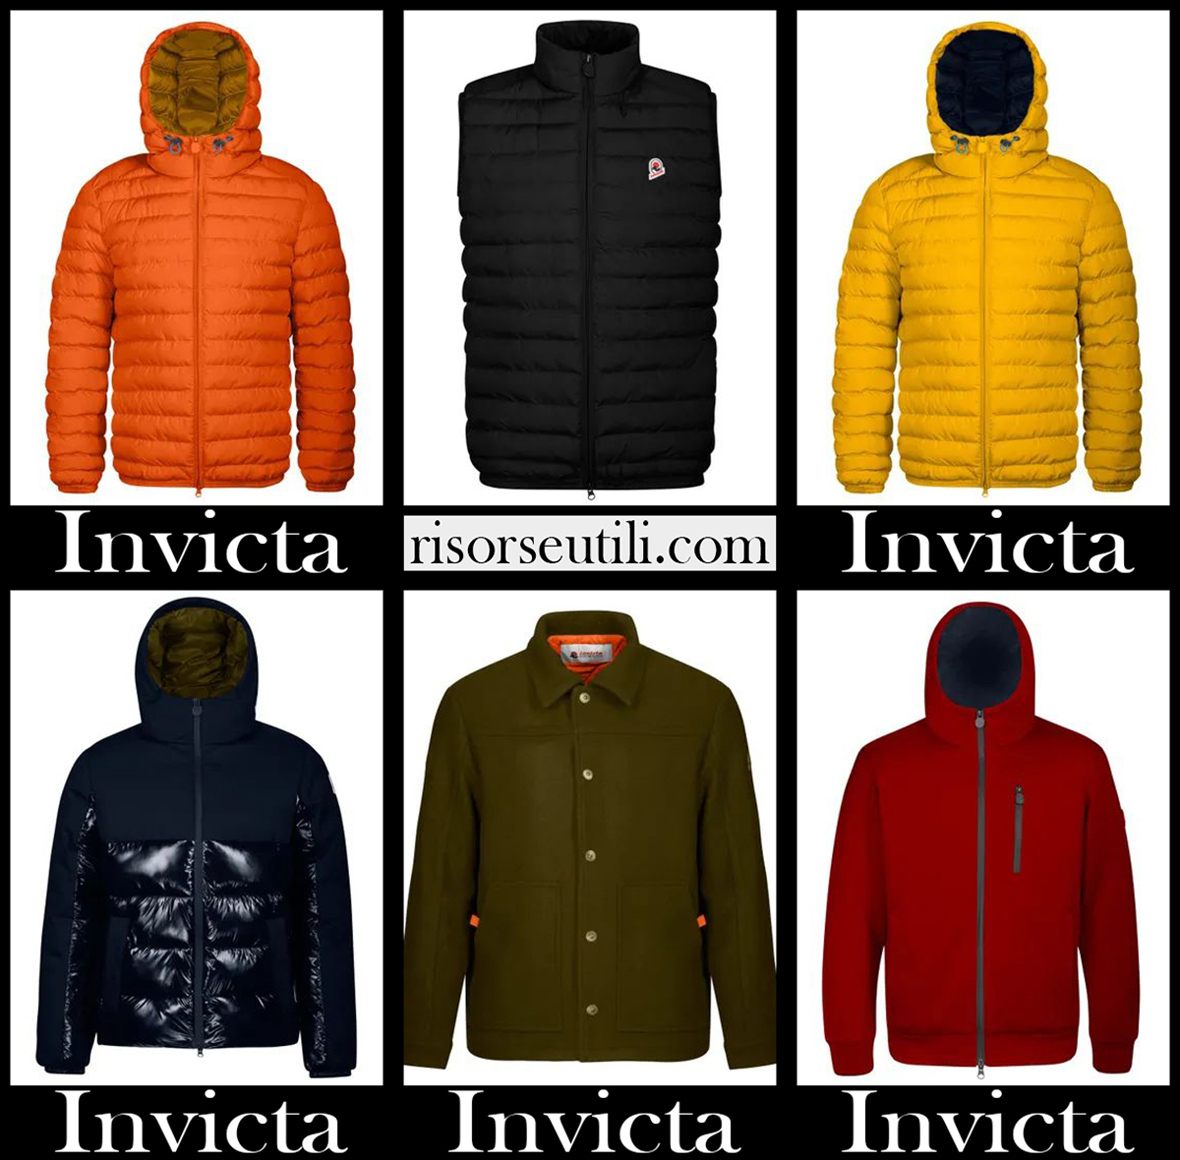 New arrivals Invicta jackets 2022 mens fashion